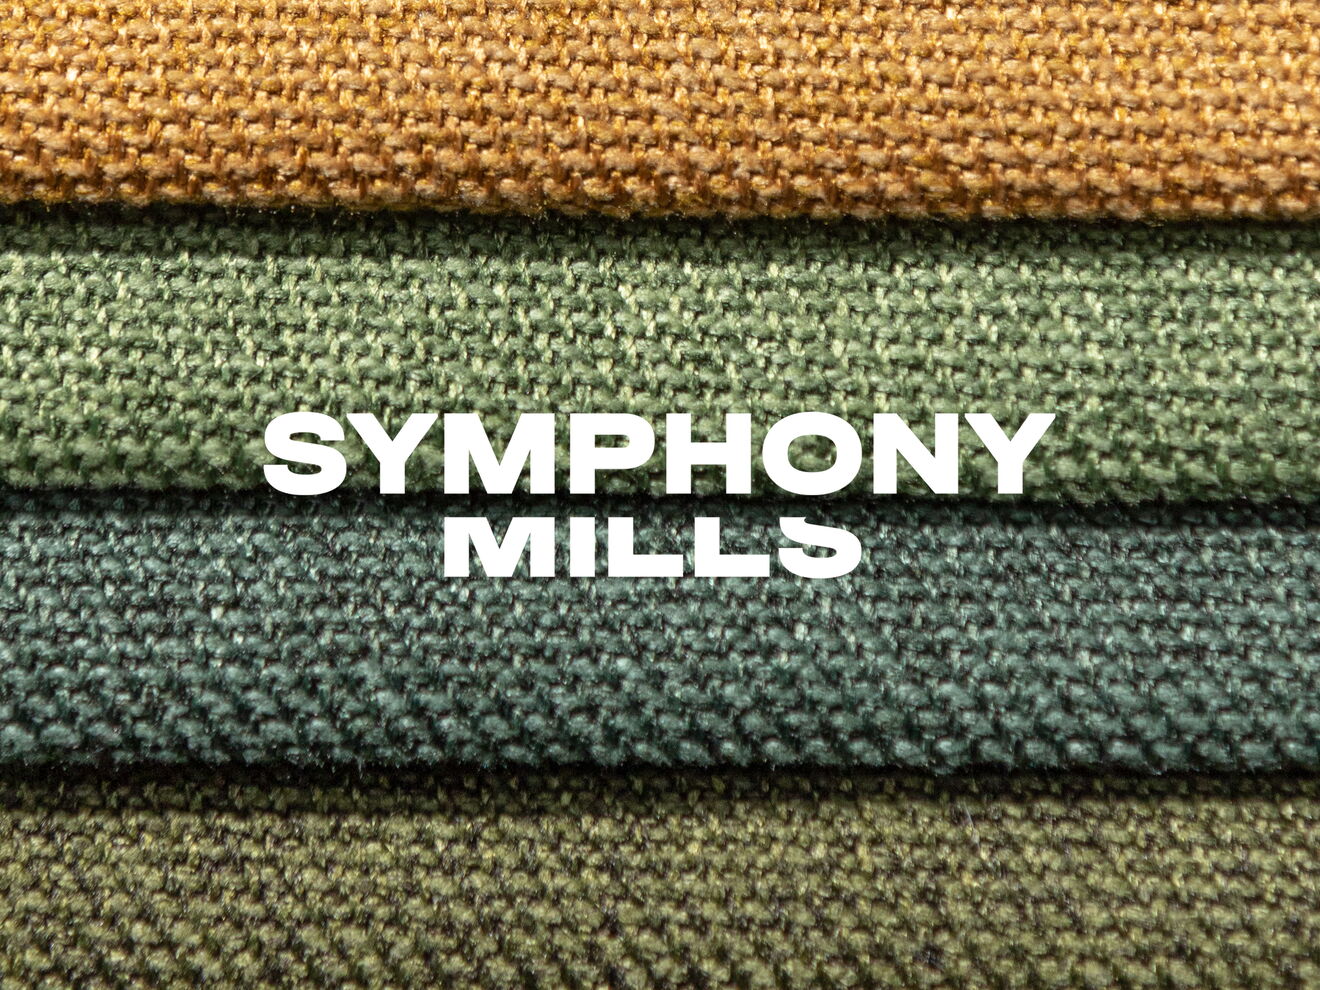 Symphony Mills logo